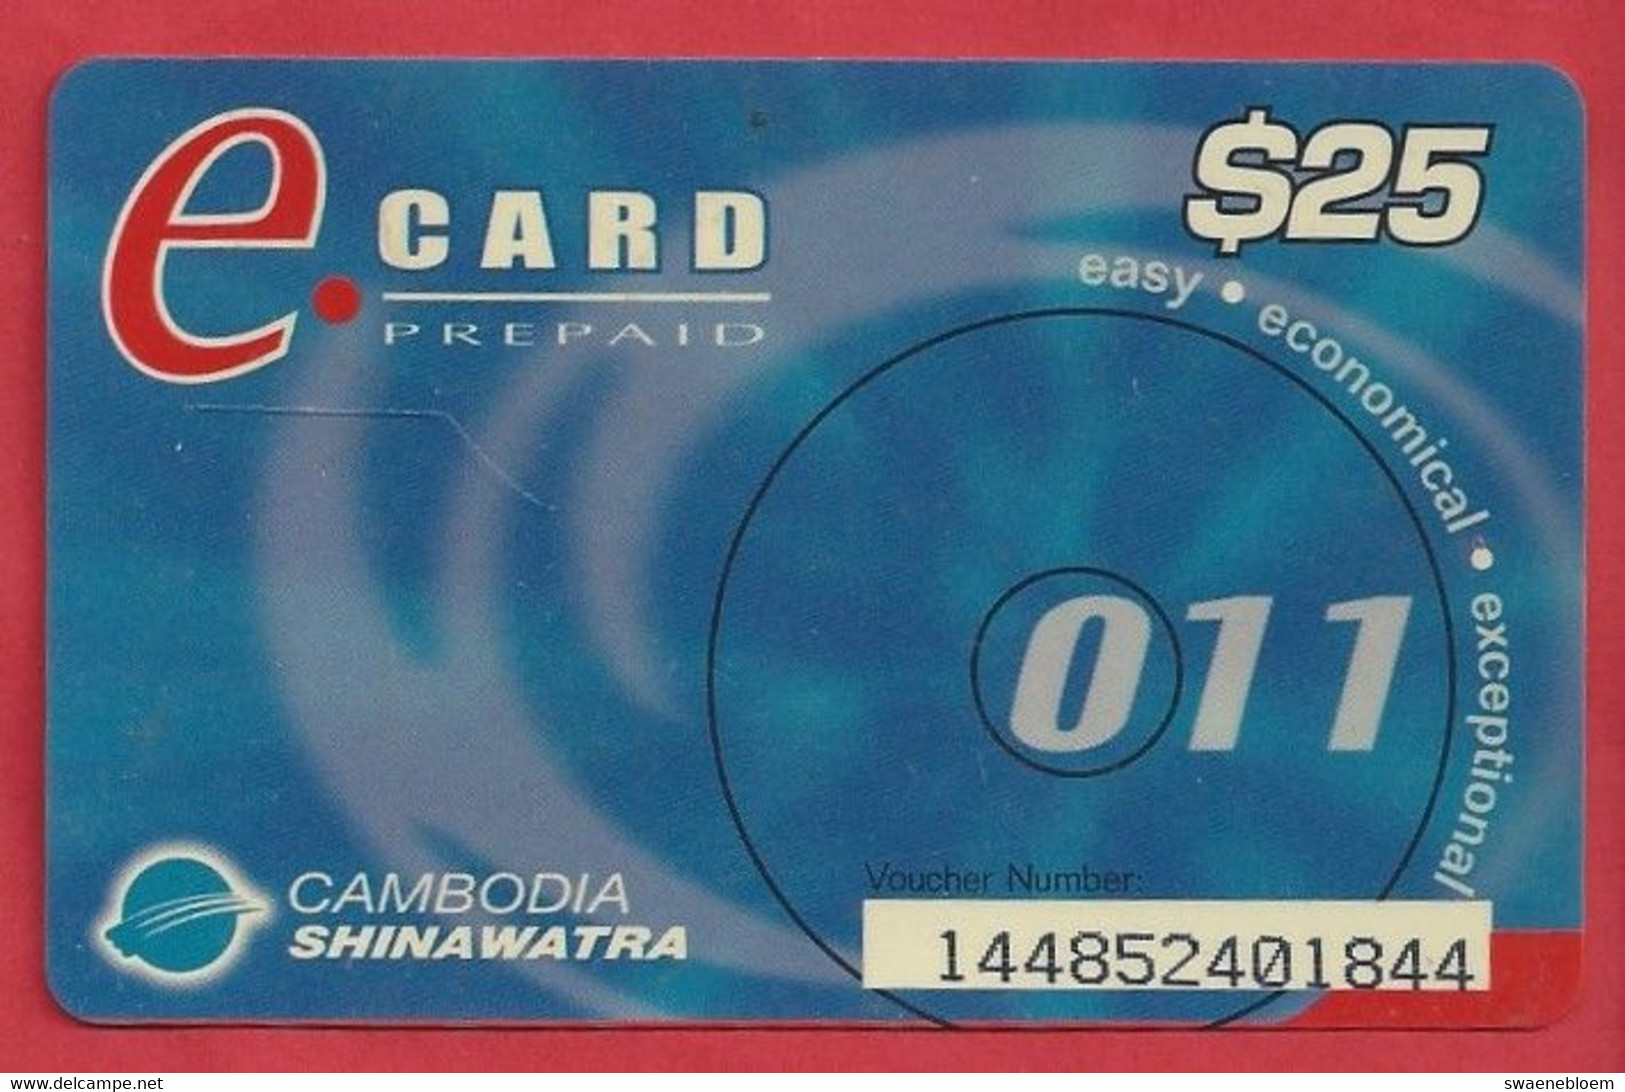 KH.- CAMBODJA. CAMBODIA. SHINAWATRA. E. CARD PREPAID. TELEPHONE CARD $25. USED. 011 EASY. ECONOMICAL. EXCEPTIONAL - Kambodscha